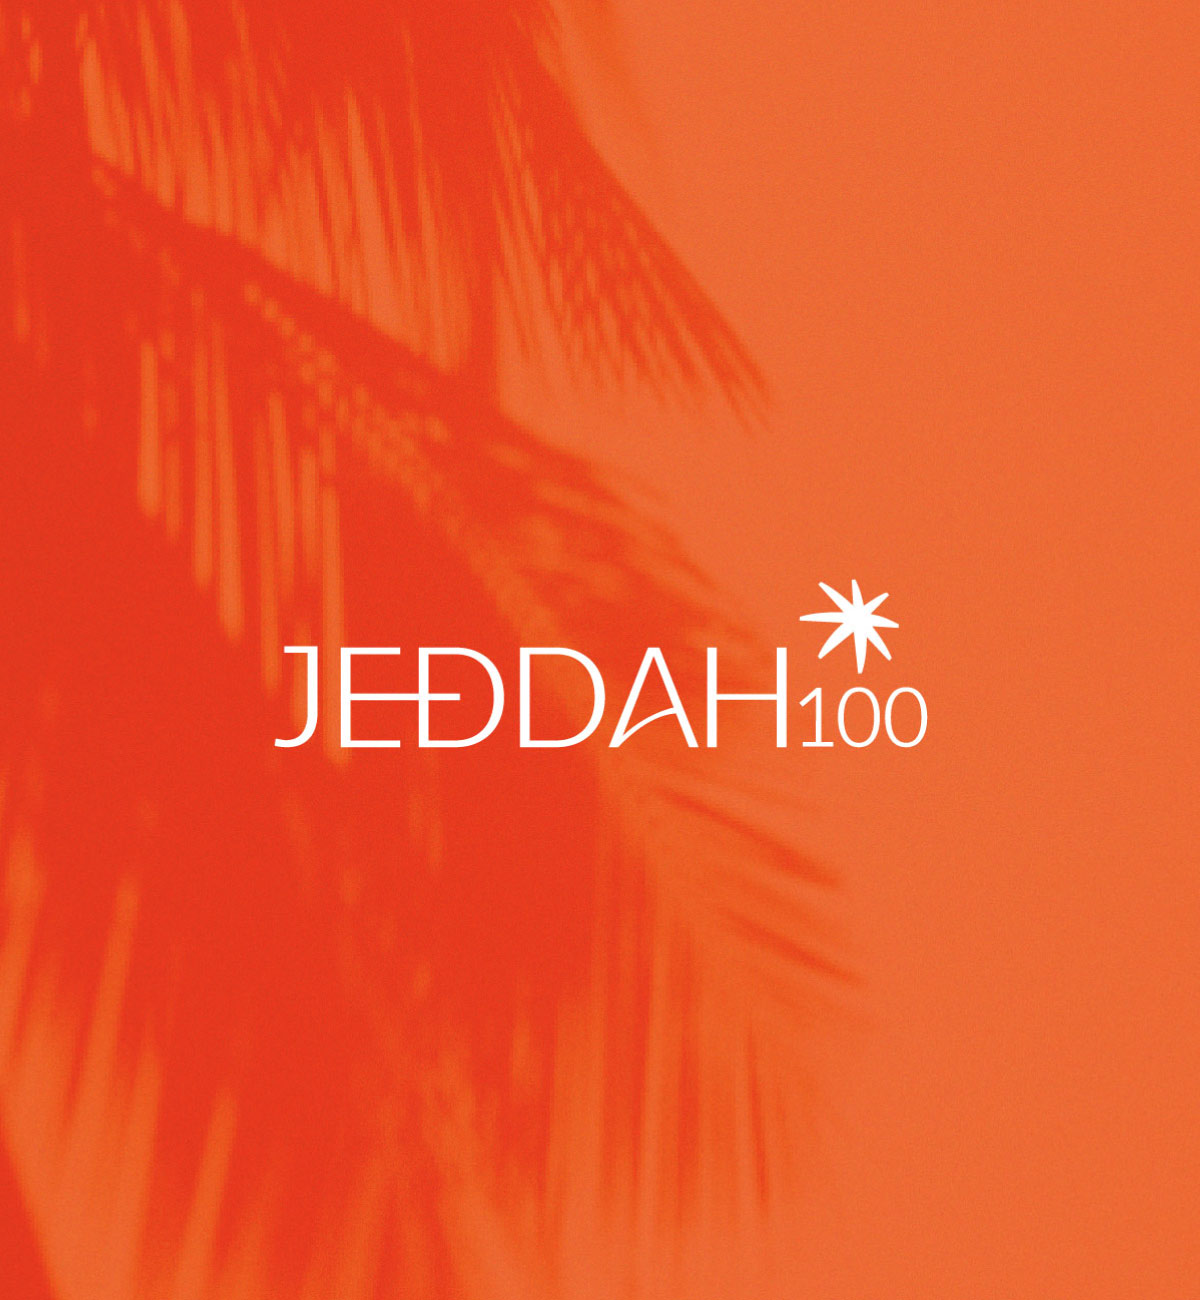 Aimstyle portfolio | Jeddah 100 - Culture-Infused Identity 